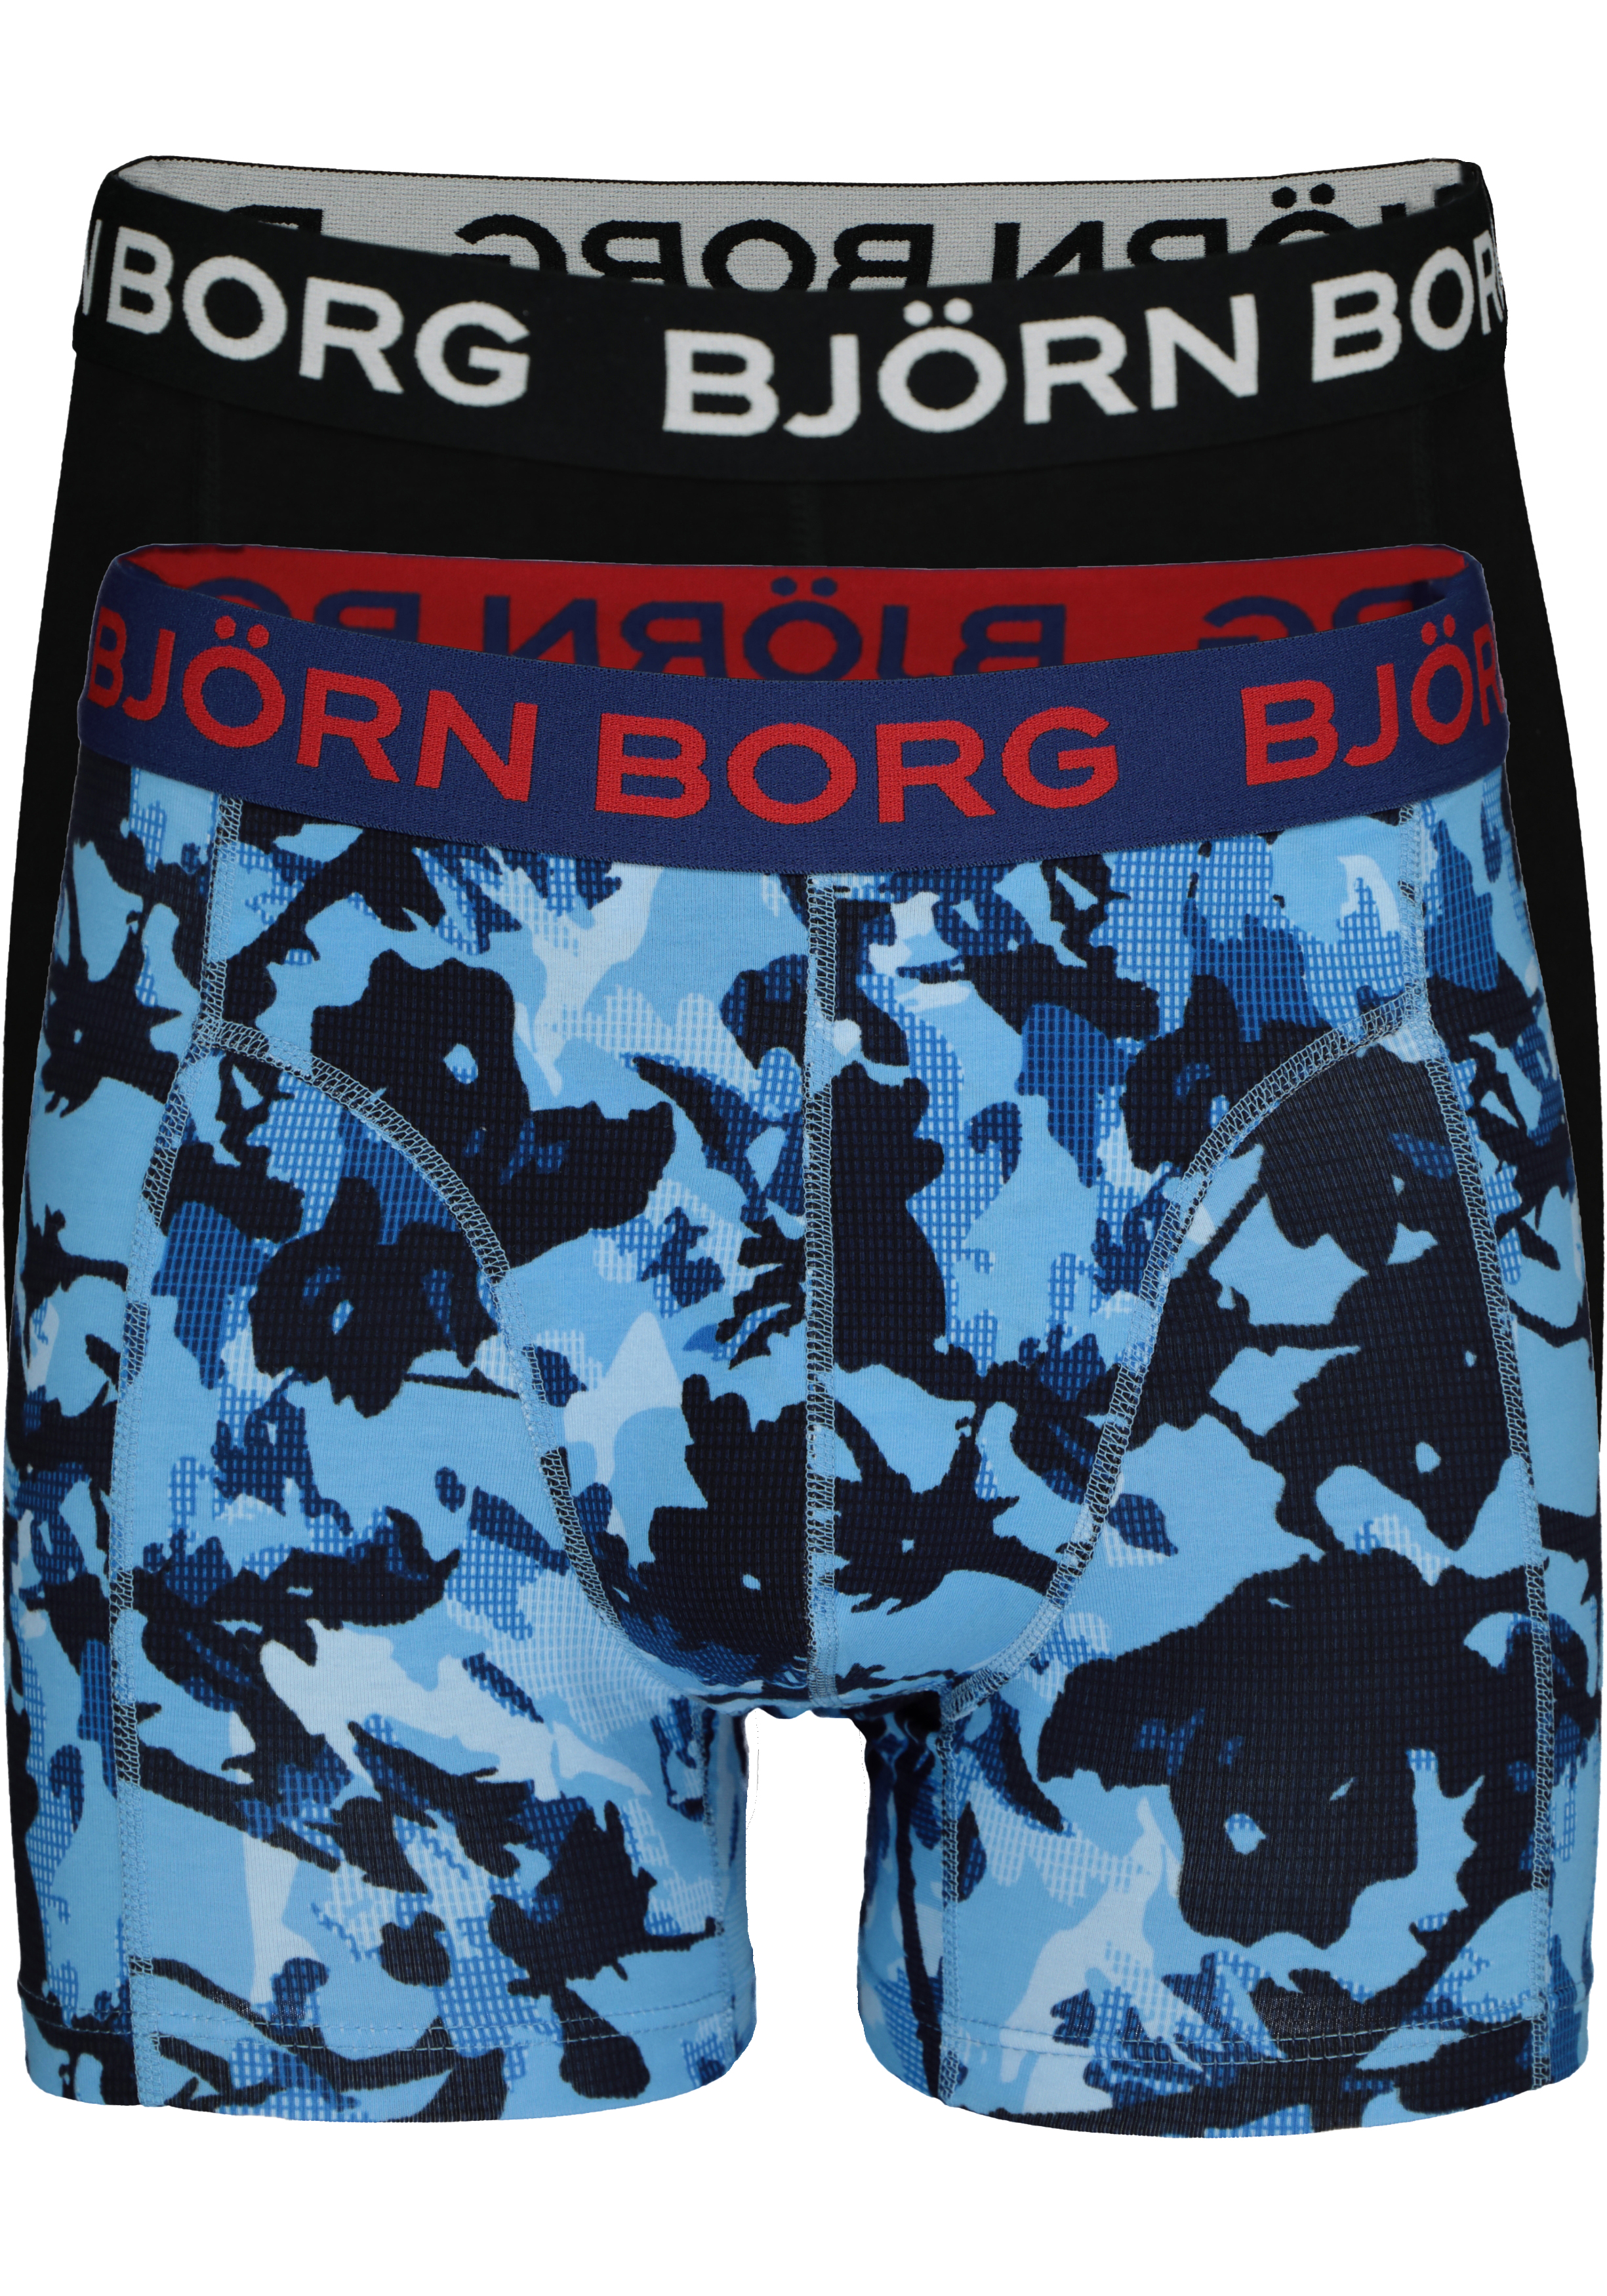 Gedeeltelijk Orkaan karton Bjorn Borg Cotton Stretch Shorts (2-pack), heren boxers normale lengte,...  - Zomer SALE tot 50% korting